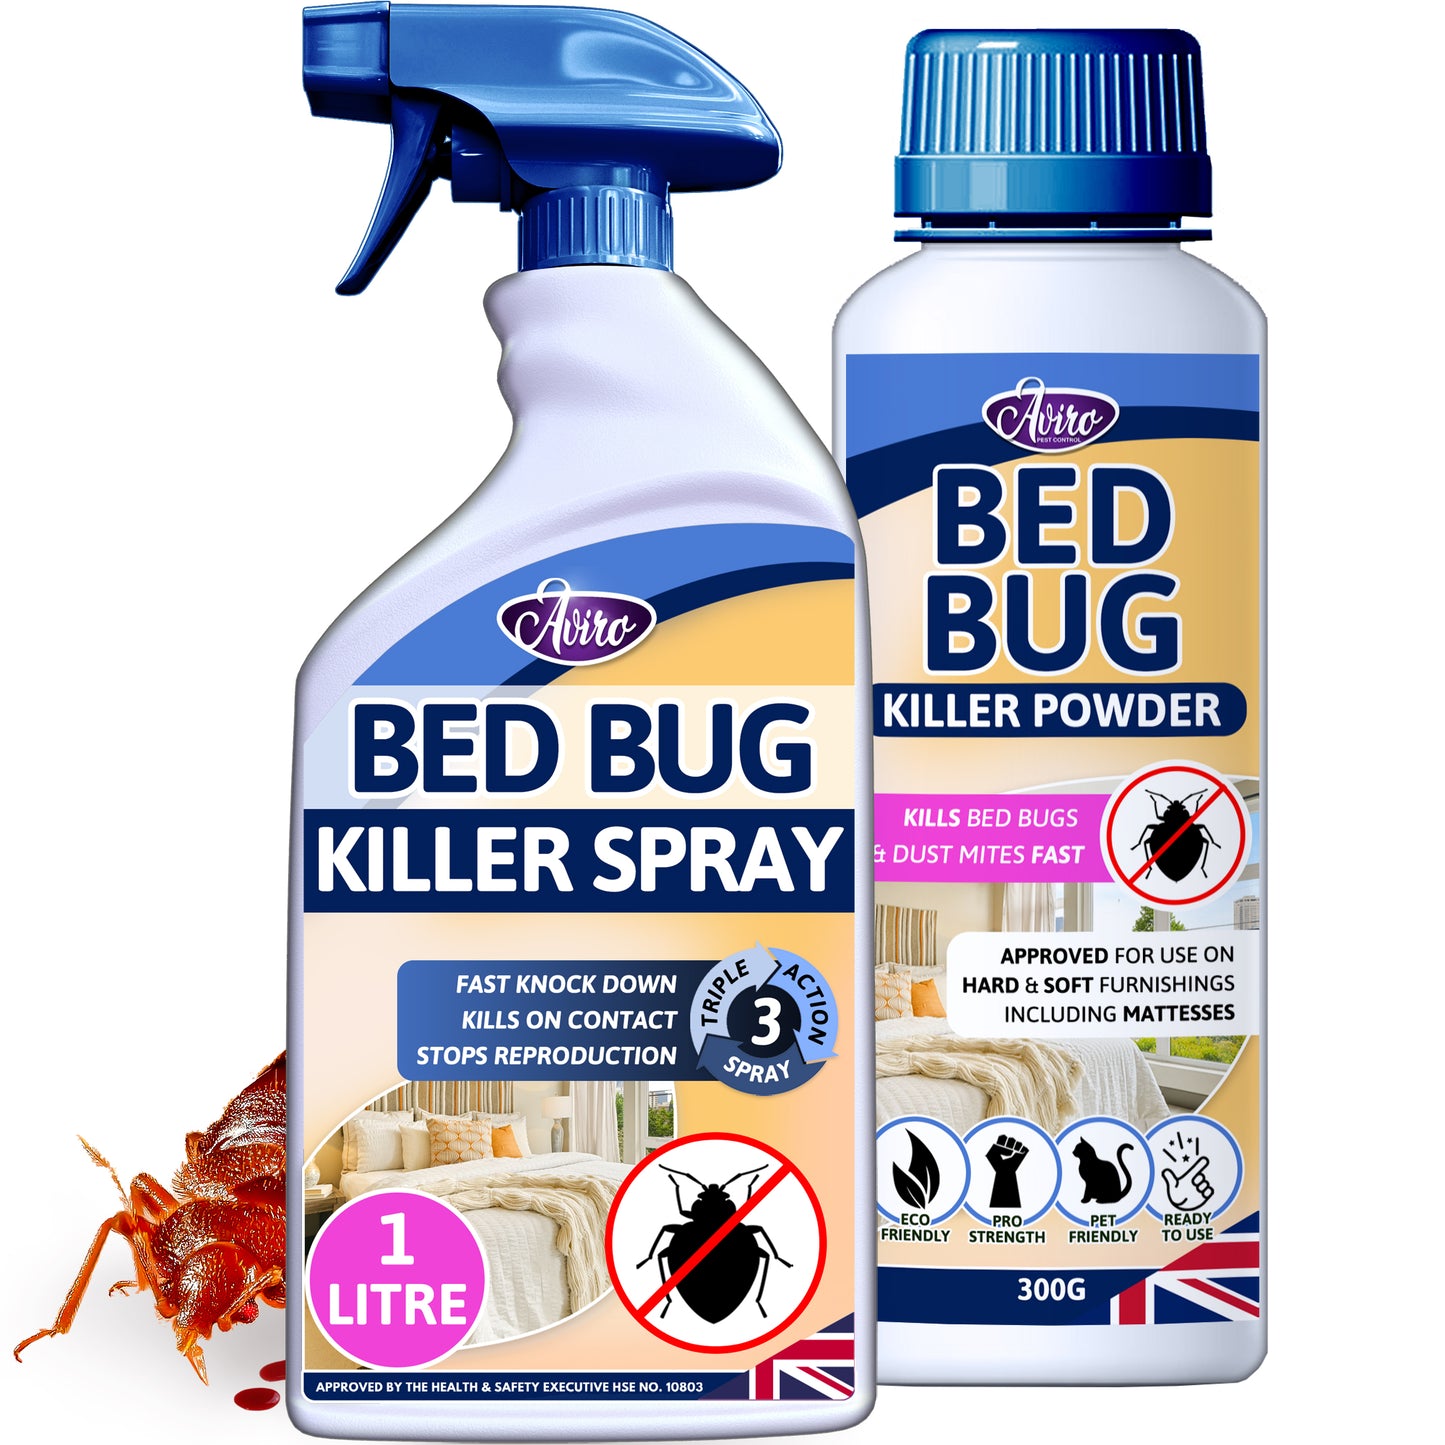 aviro-bed-bug-killer-spray-1-liter-and-powder-300-gram-pack-front-view